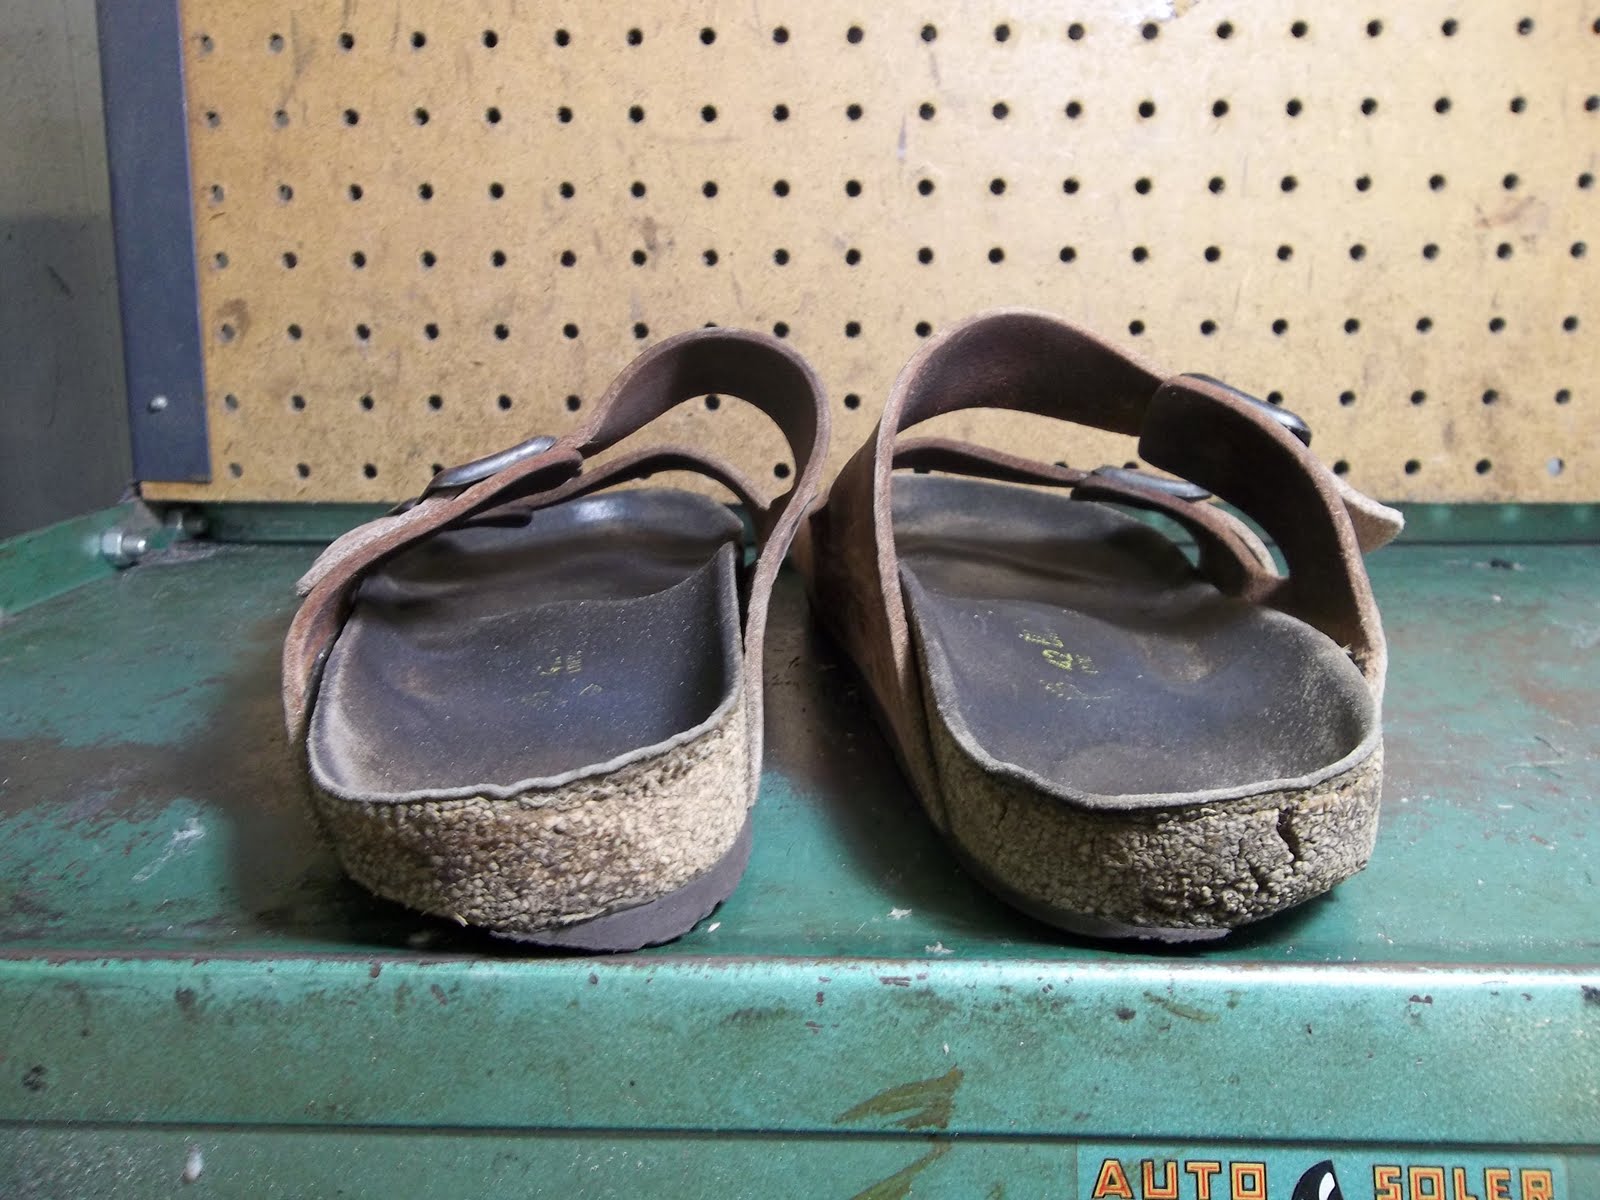 Edgewood Drive Shoe Repair: Birkenstock Rebuild Before and After